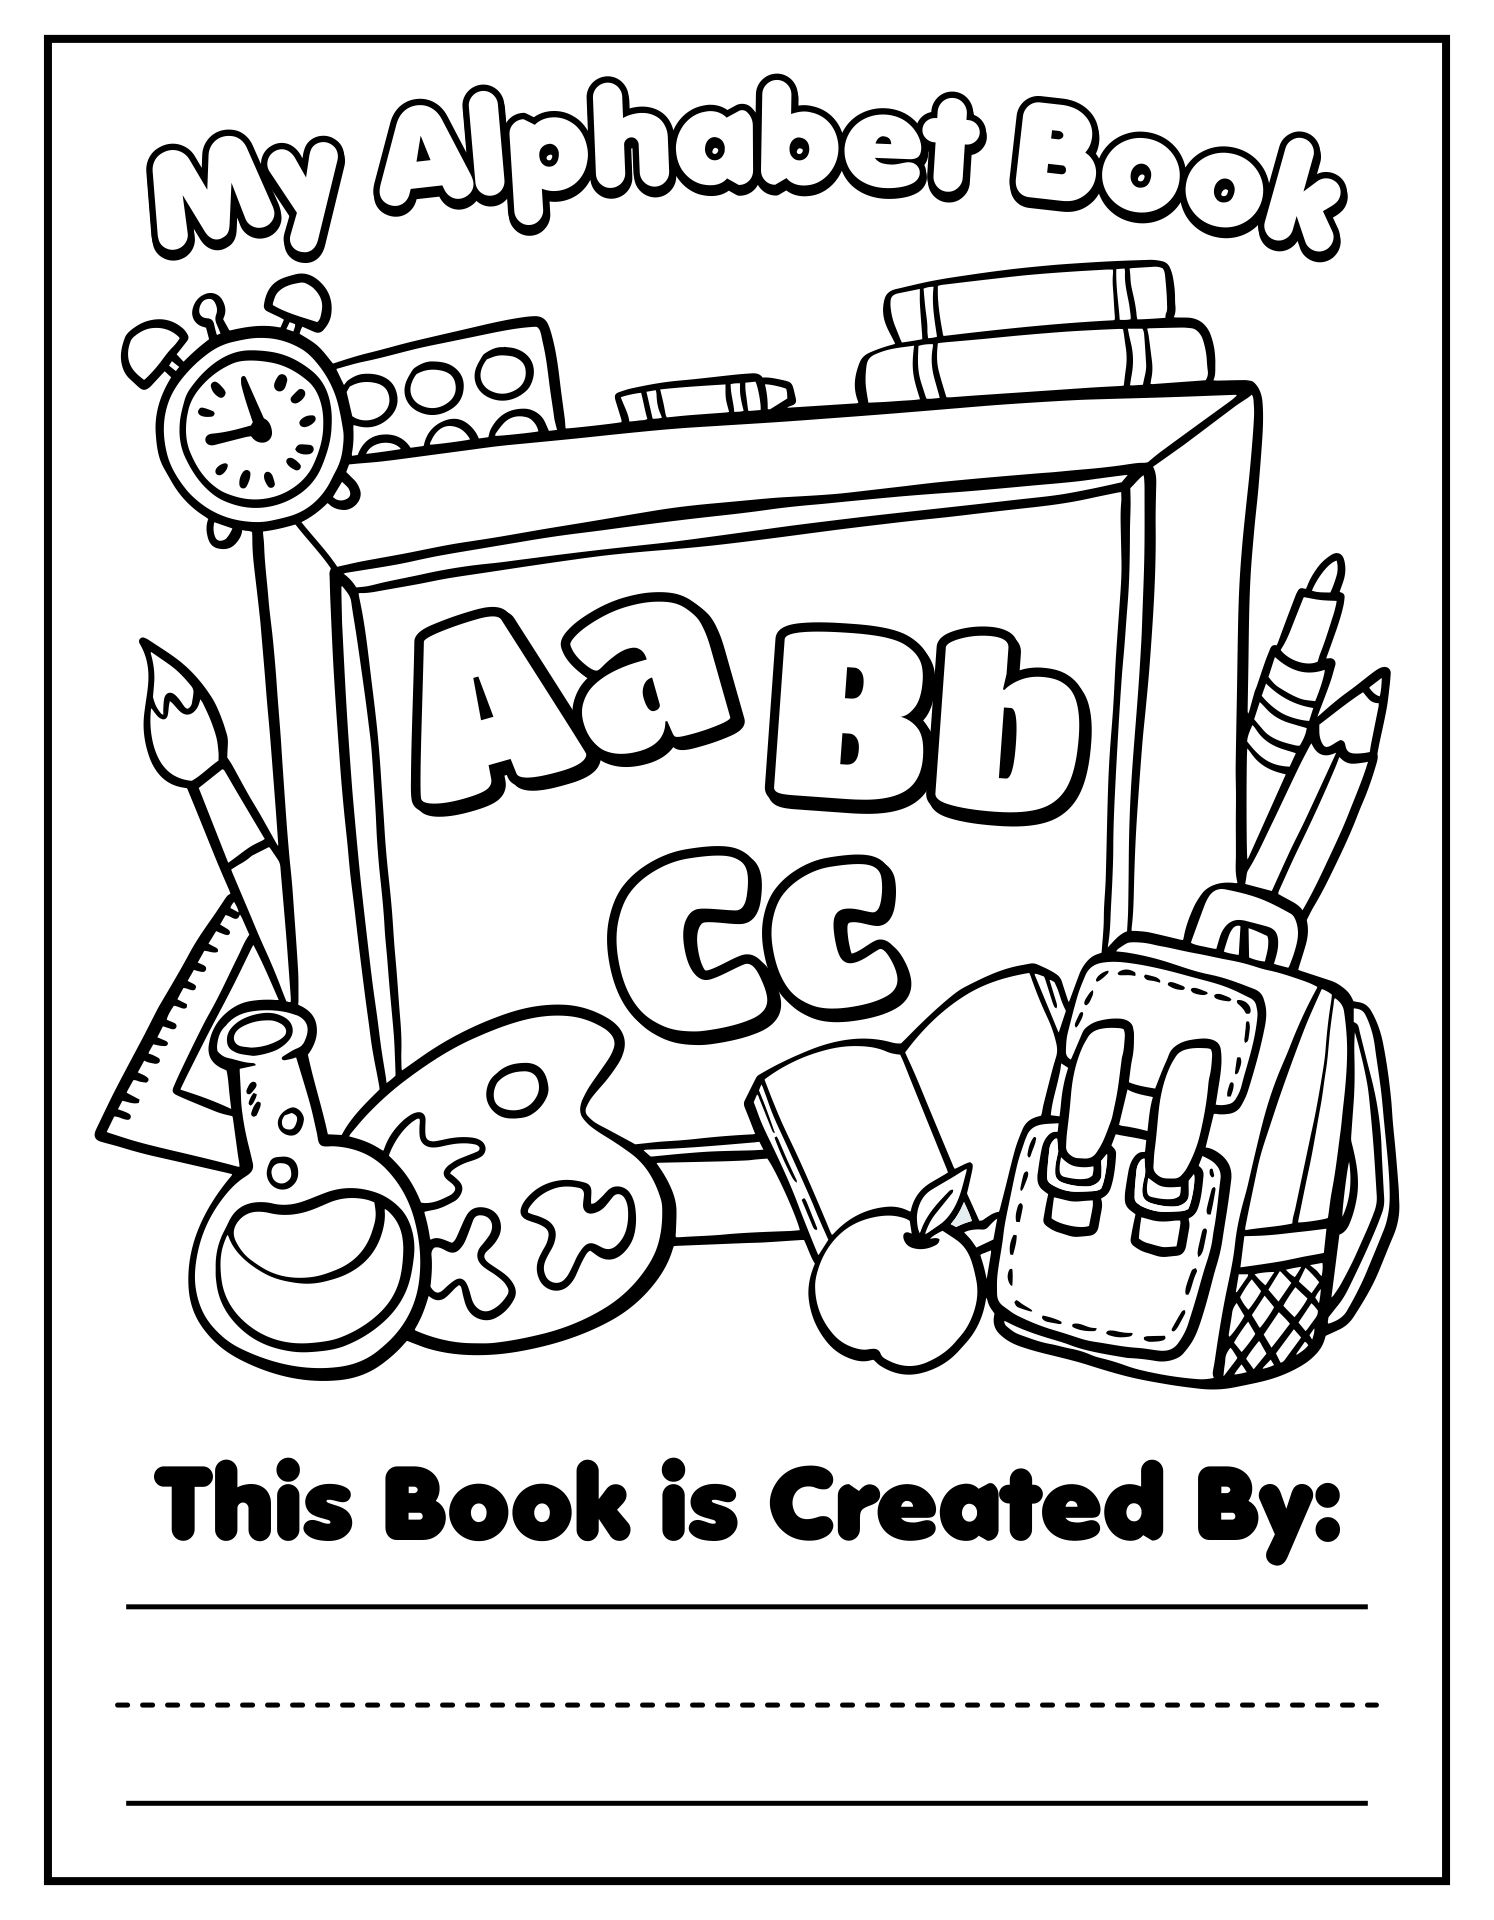 10-best-printable-alphabet-book-cover-printablee